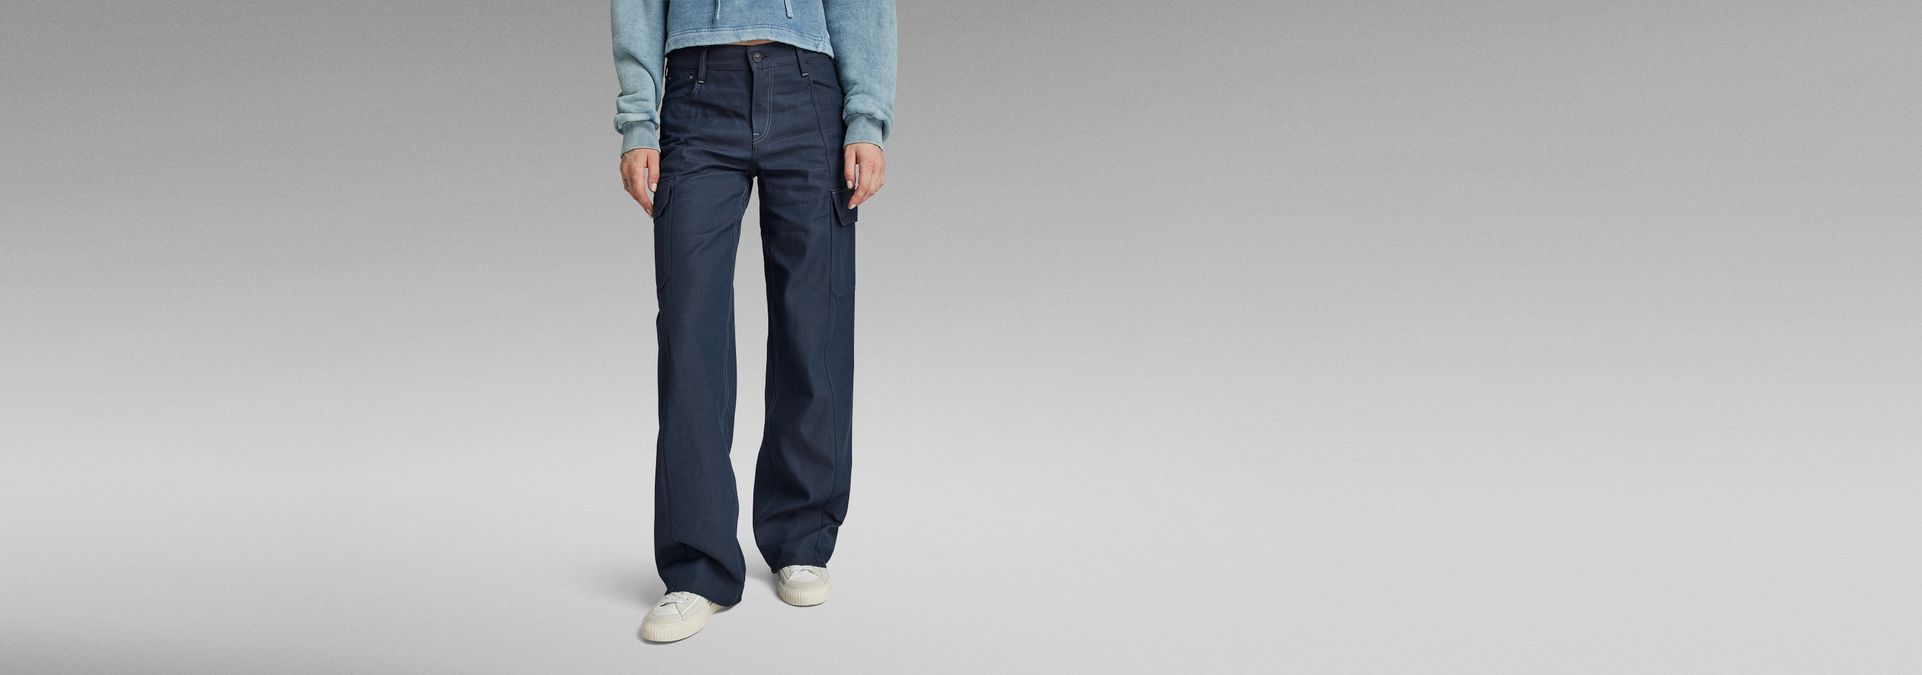 Judee Cargo blue Jeans US | Low Waist G-Star | RAW® Loose Light